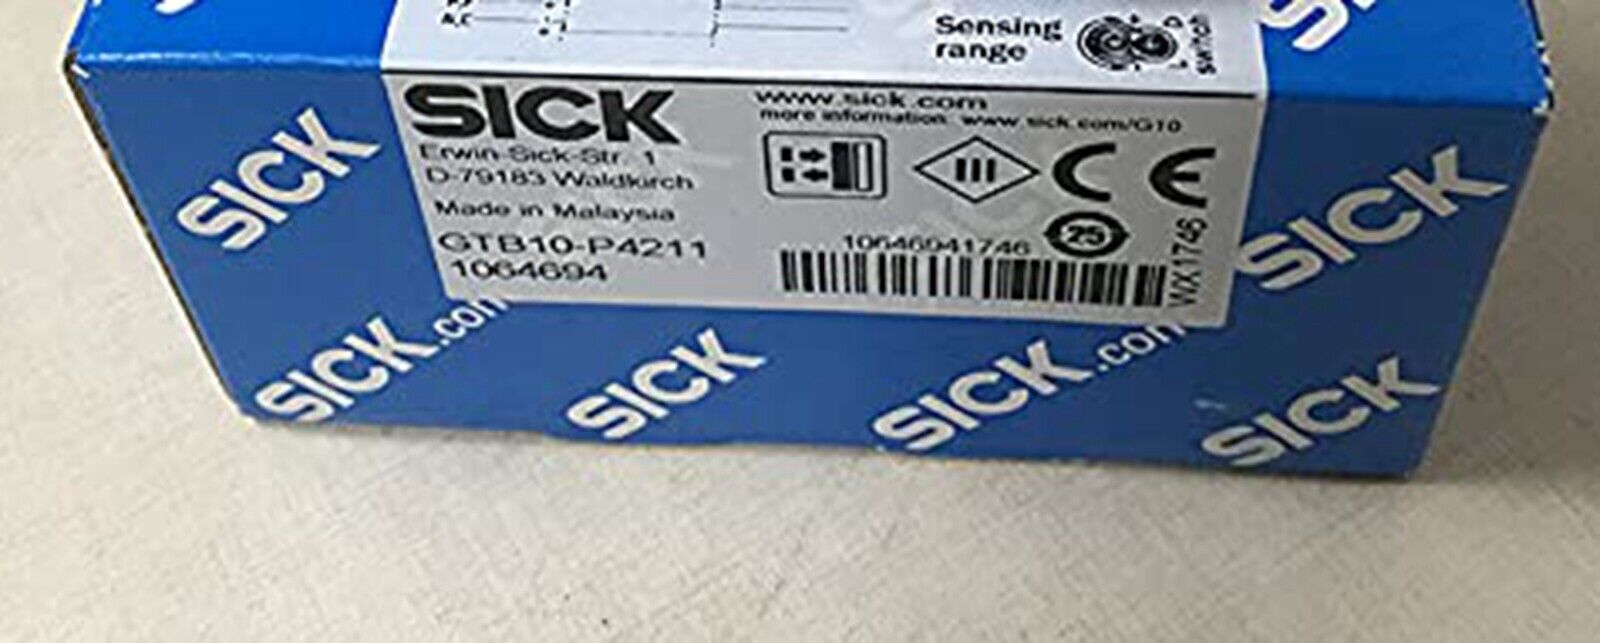 NEW SICK GTB10-P4211 Photoelectric Sensor